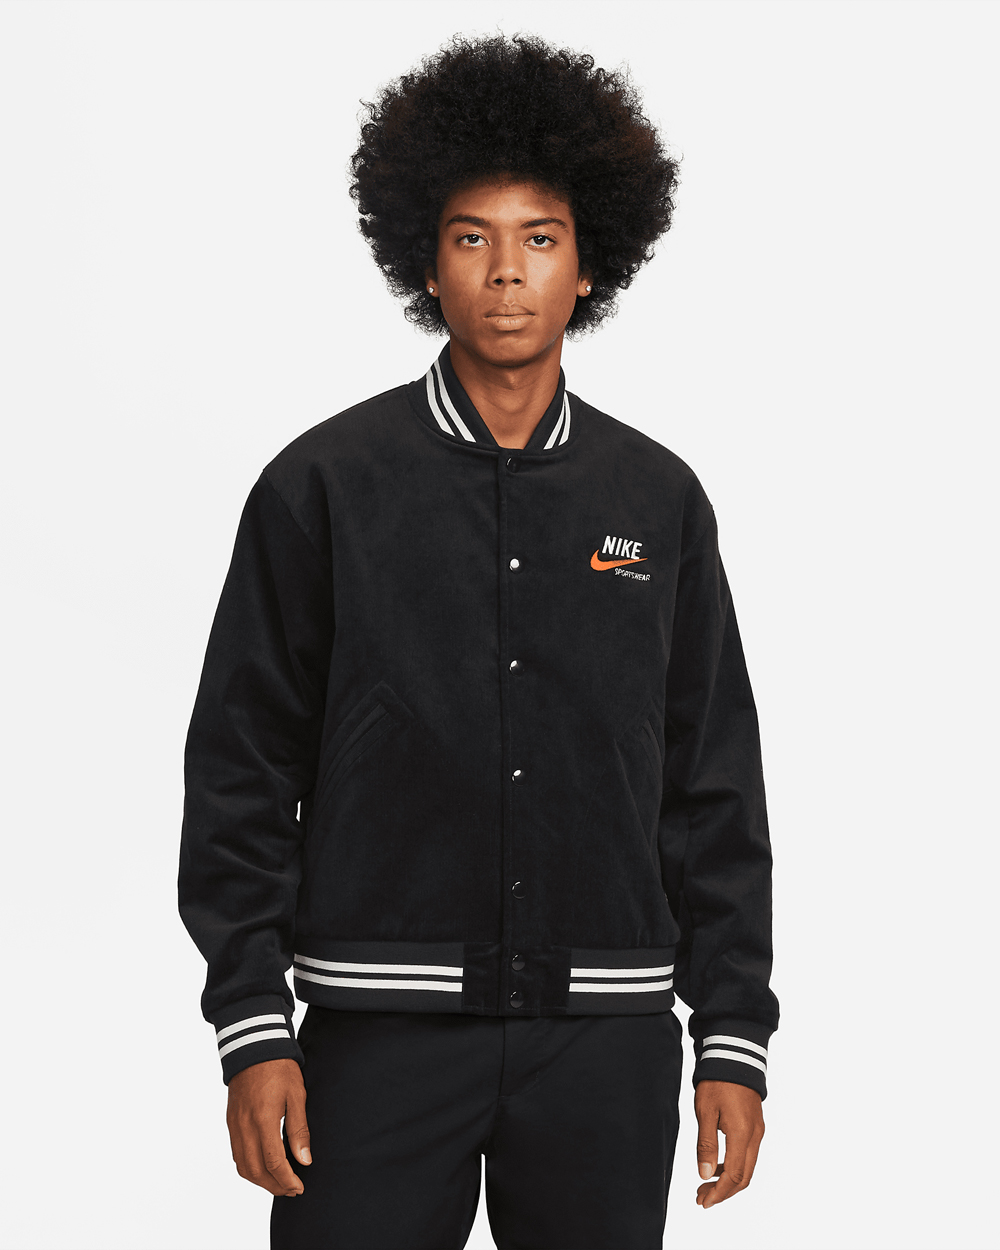 Nike-Sportswear-Trend-Bomber-Jacket-Black-White-Orange-1